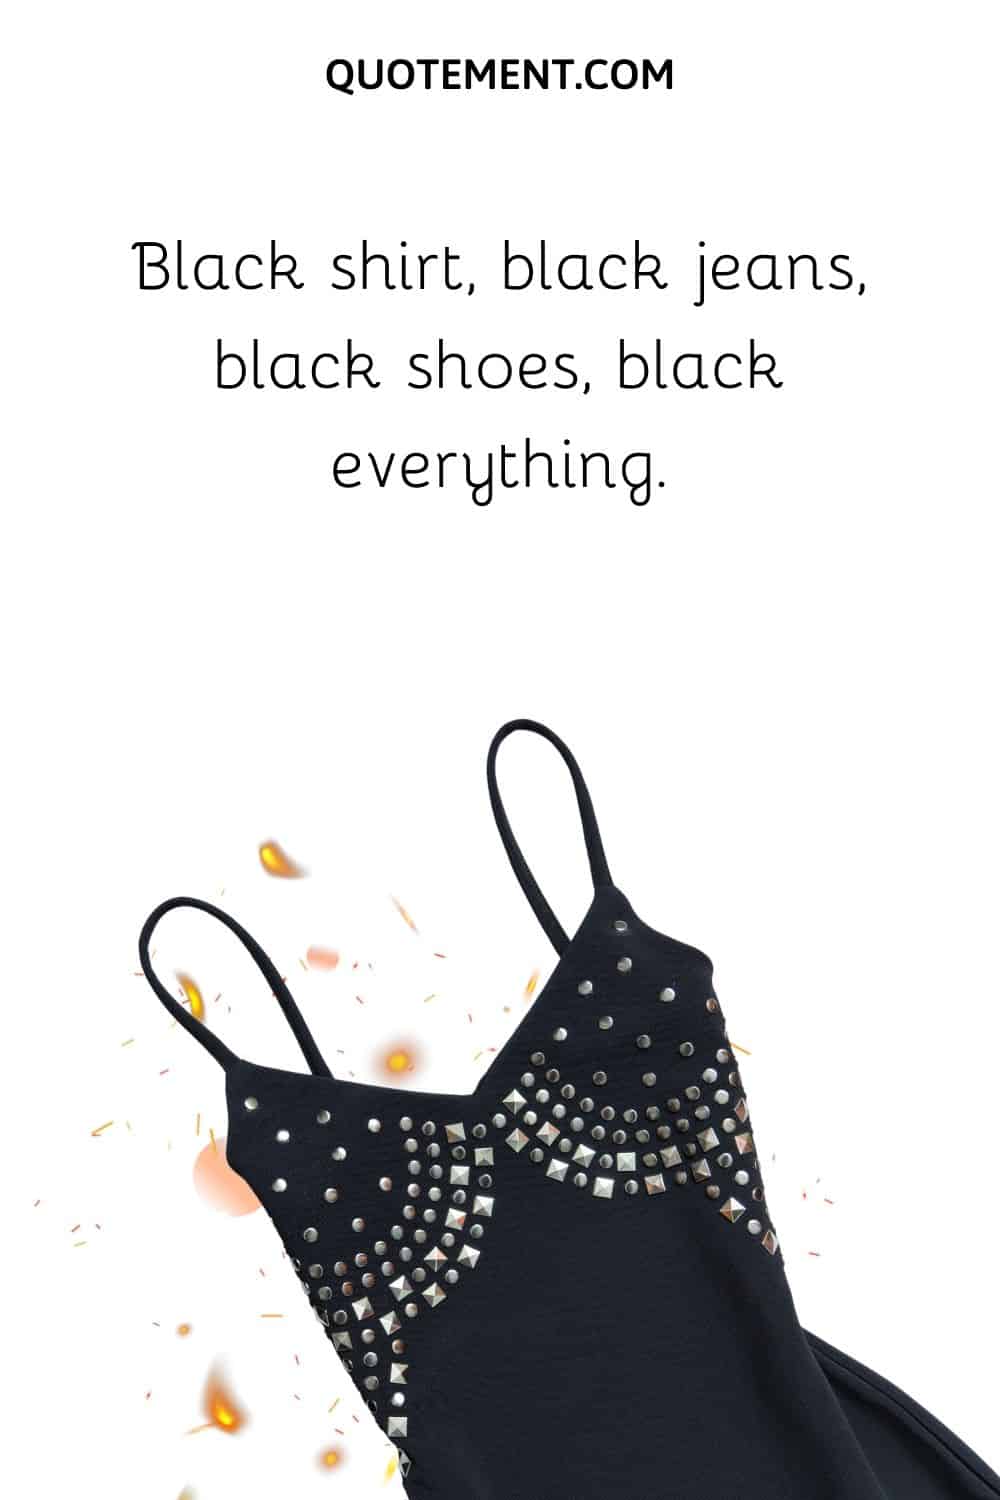 Black shirt, black jeans, black shoes, black everything.